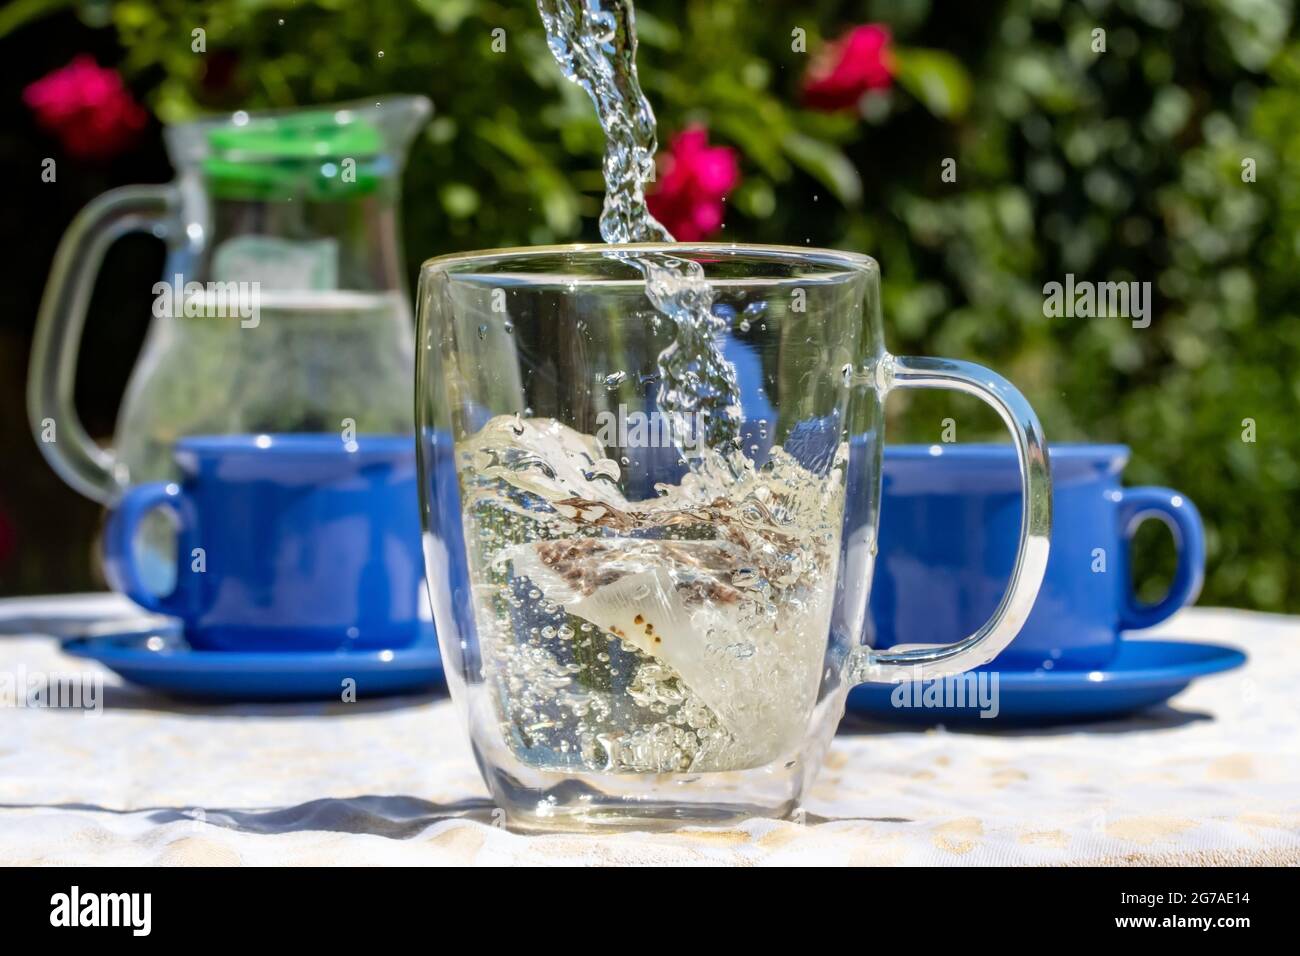 https://c8.alamy.com/comp/2G7AE14/water-flows-into-a-mug-with-a-tea-bag-a-picnic-in-the-summer-garden-2G7AE14.jpg